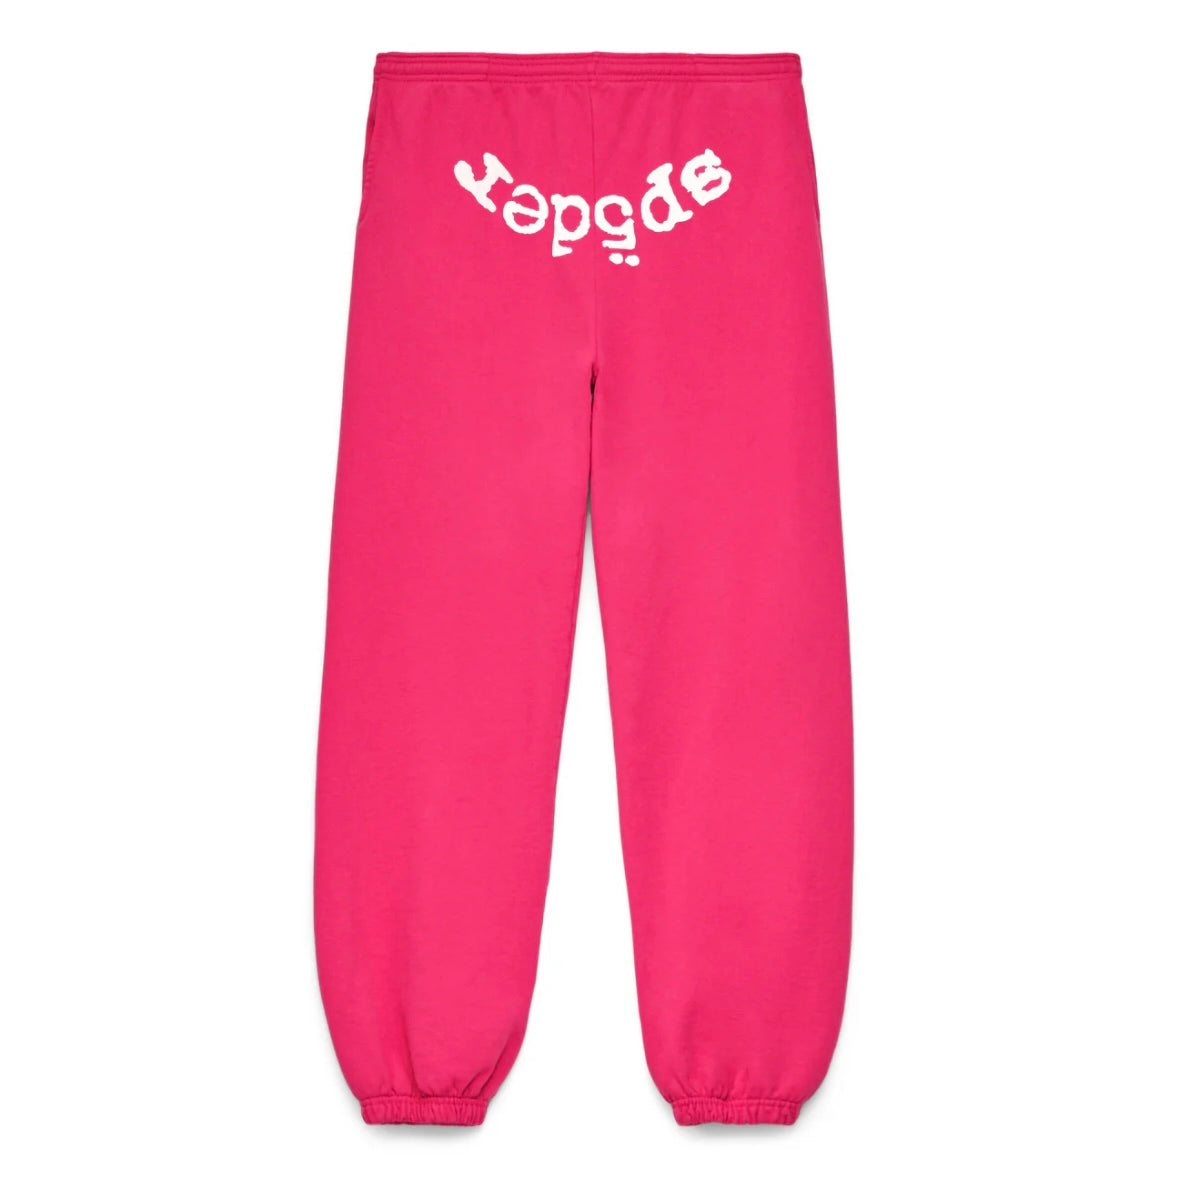 Sp5der Pink White Legacy Sweatpants Front